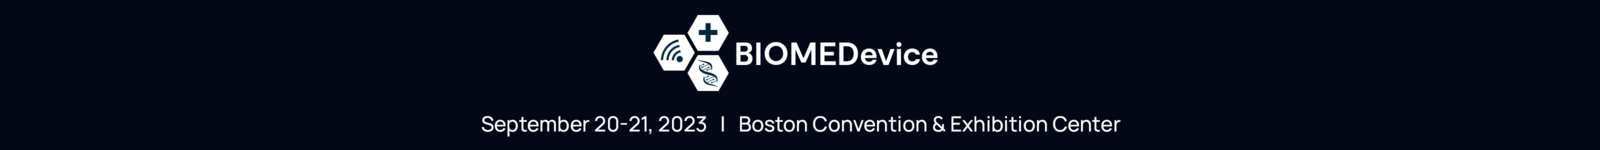 BIOMEDevice Boston 2022 logo